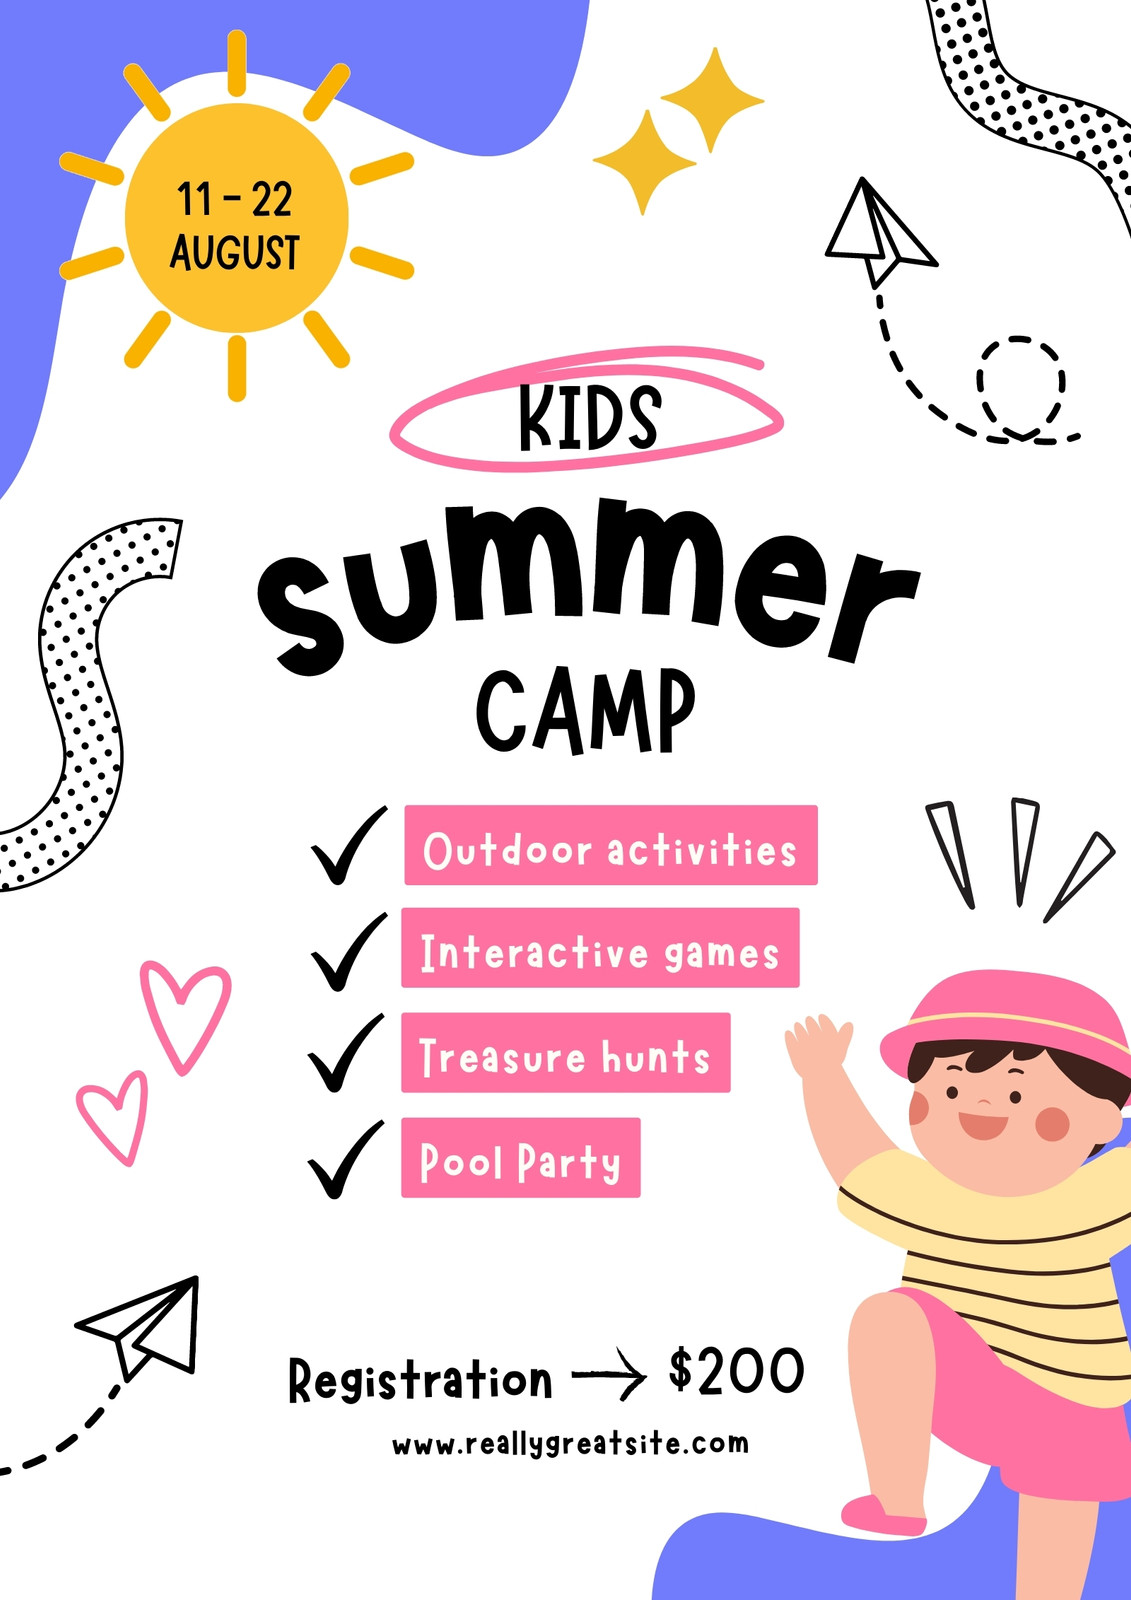 https://marketplace.canva.com/EAFivf4Al4I/1/0/1131w/canva-pink-illustrative-kids-summer-camp-poster-wMEtv_Zn4ZE.jpg